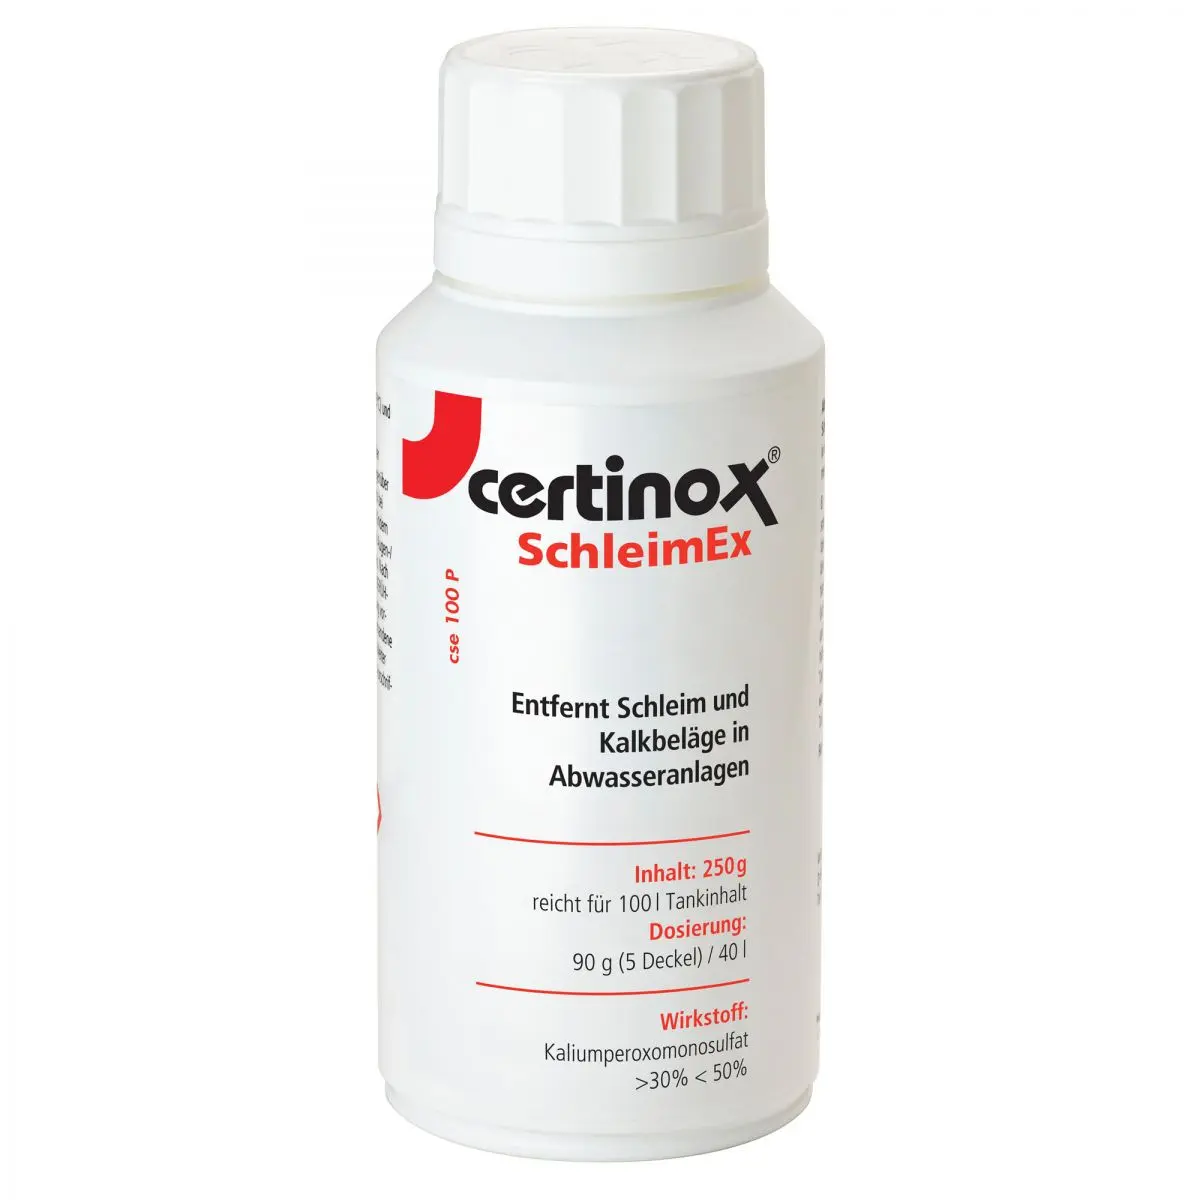 Certinox SlimeEx cse 100 p - cse 100 p, 250 g por